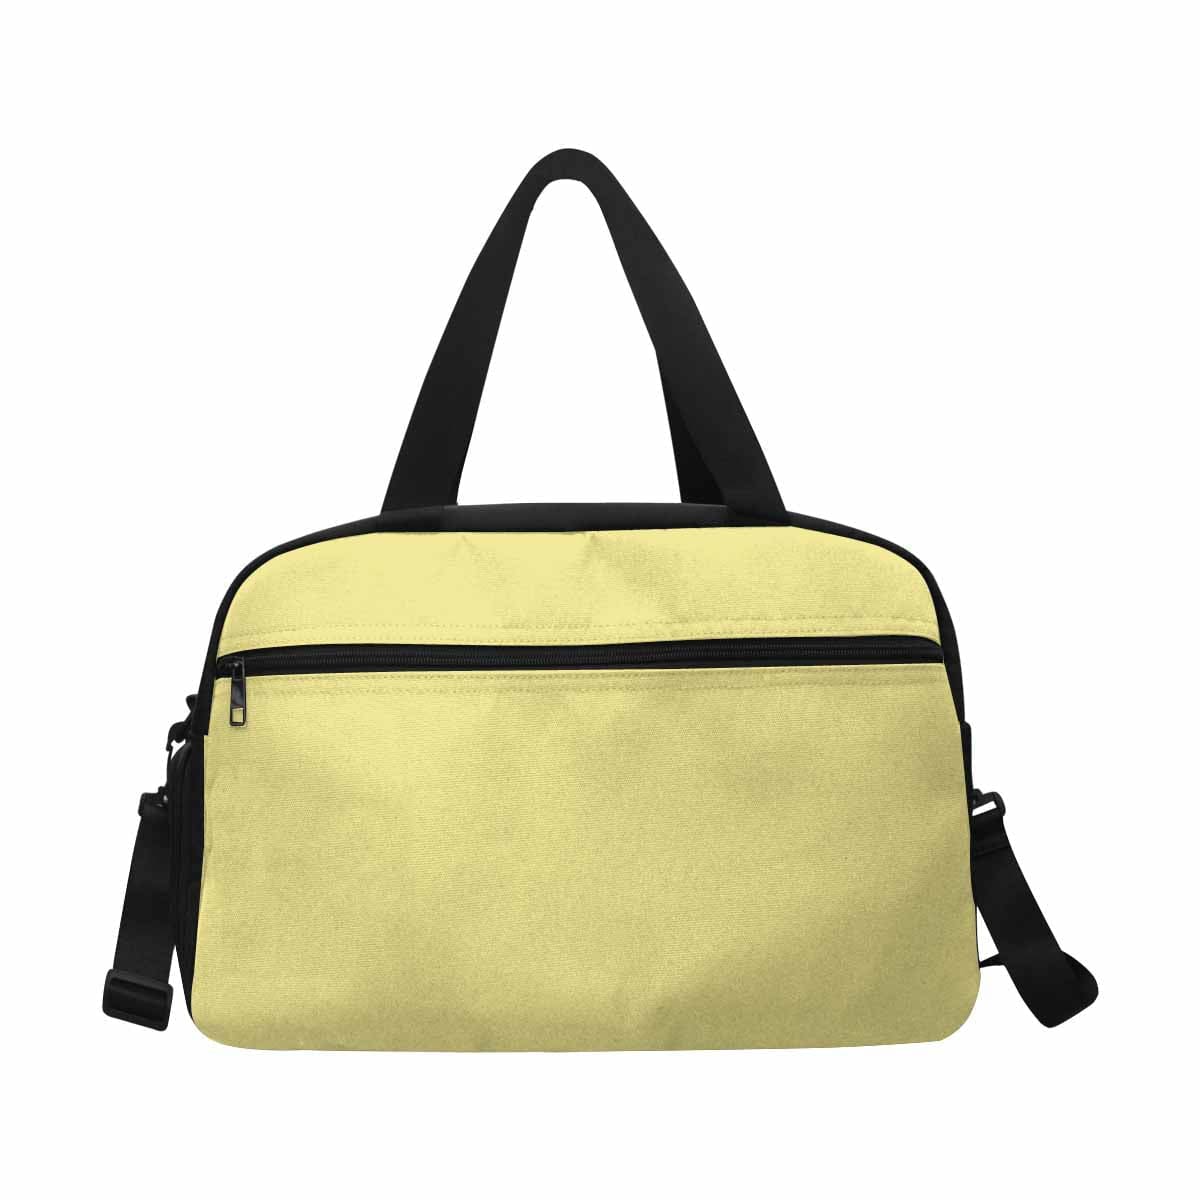 Khaki Yellow Tote And Crossbody Travel Bag - Bags | Travel Bags | Crossbody